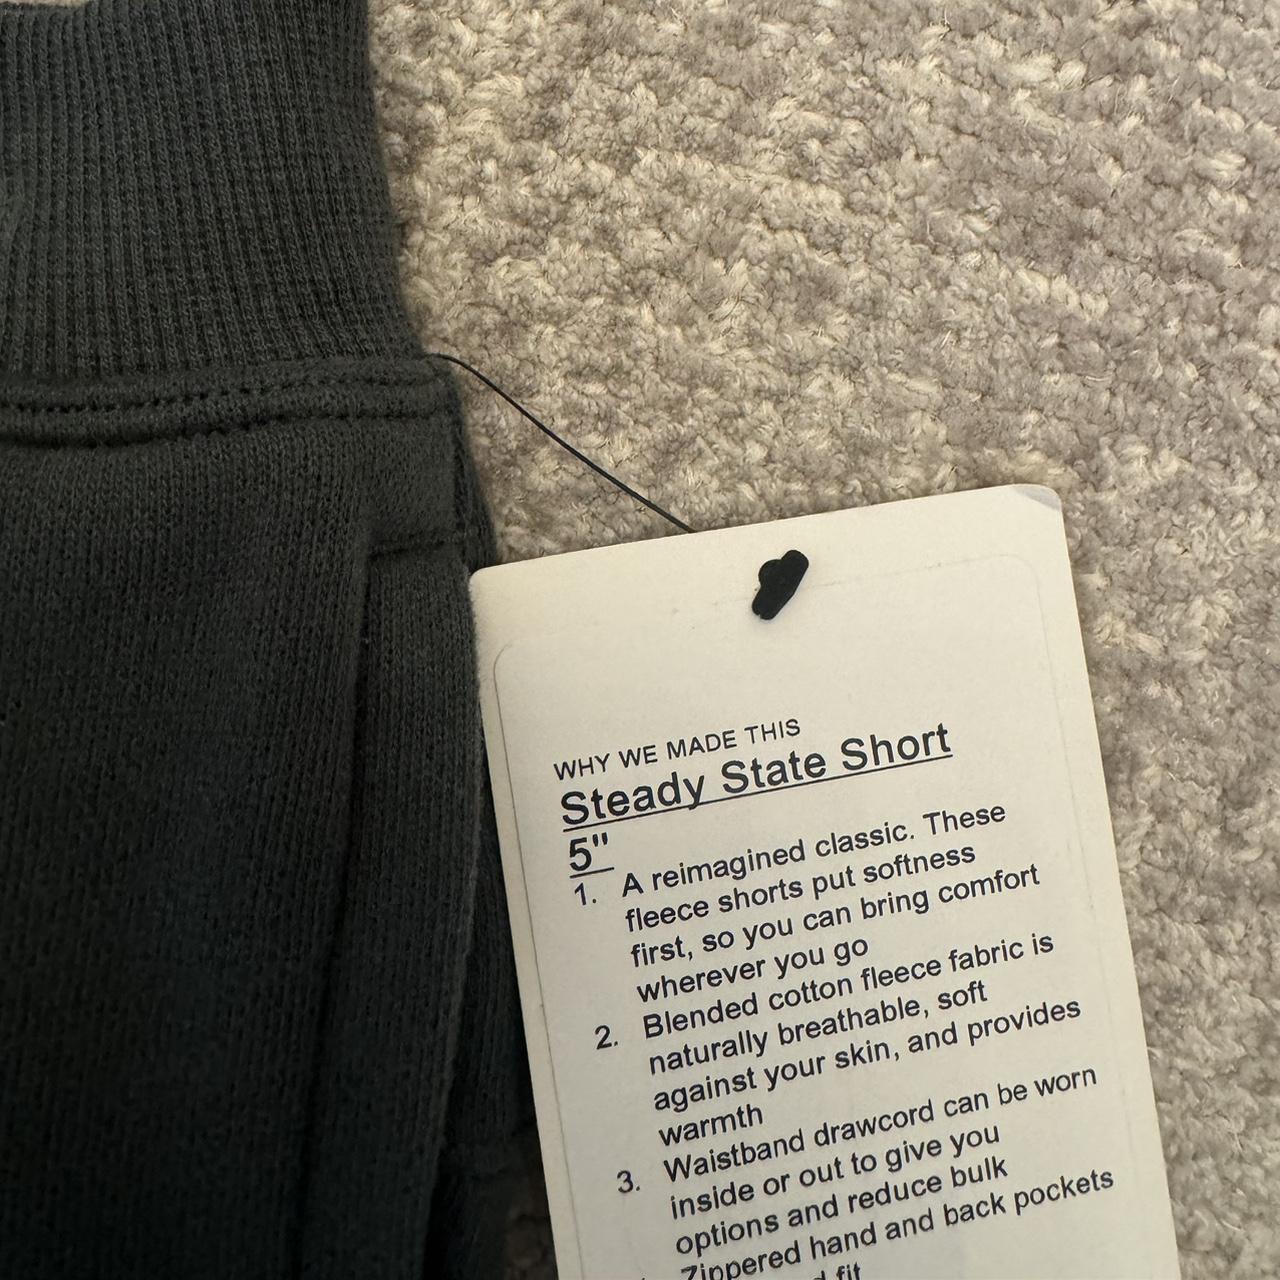 Steady State Short 5, Men's Shorts